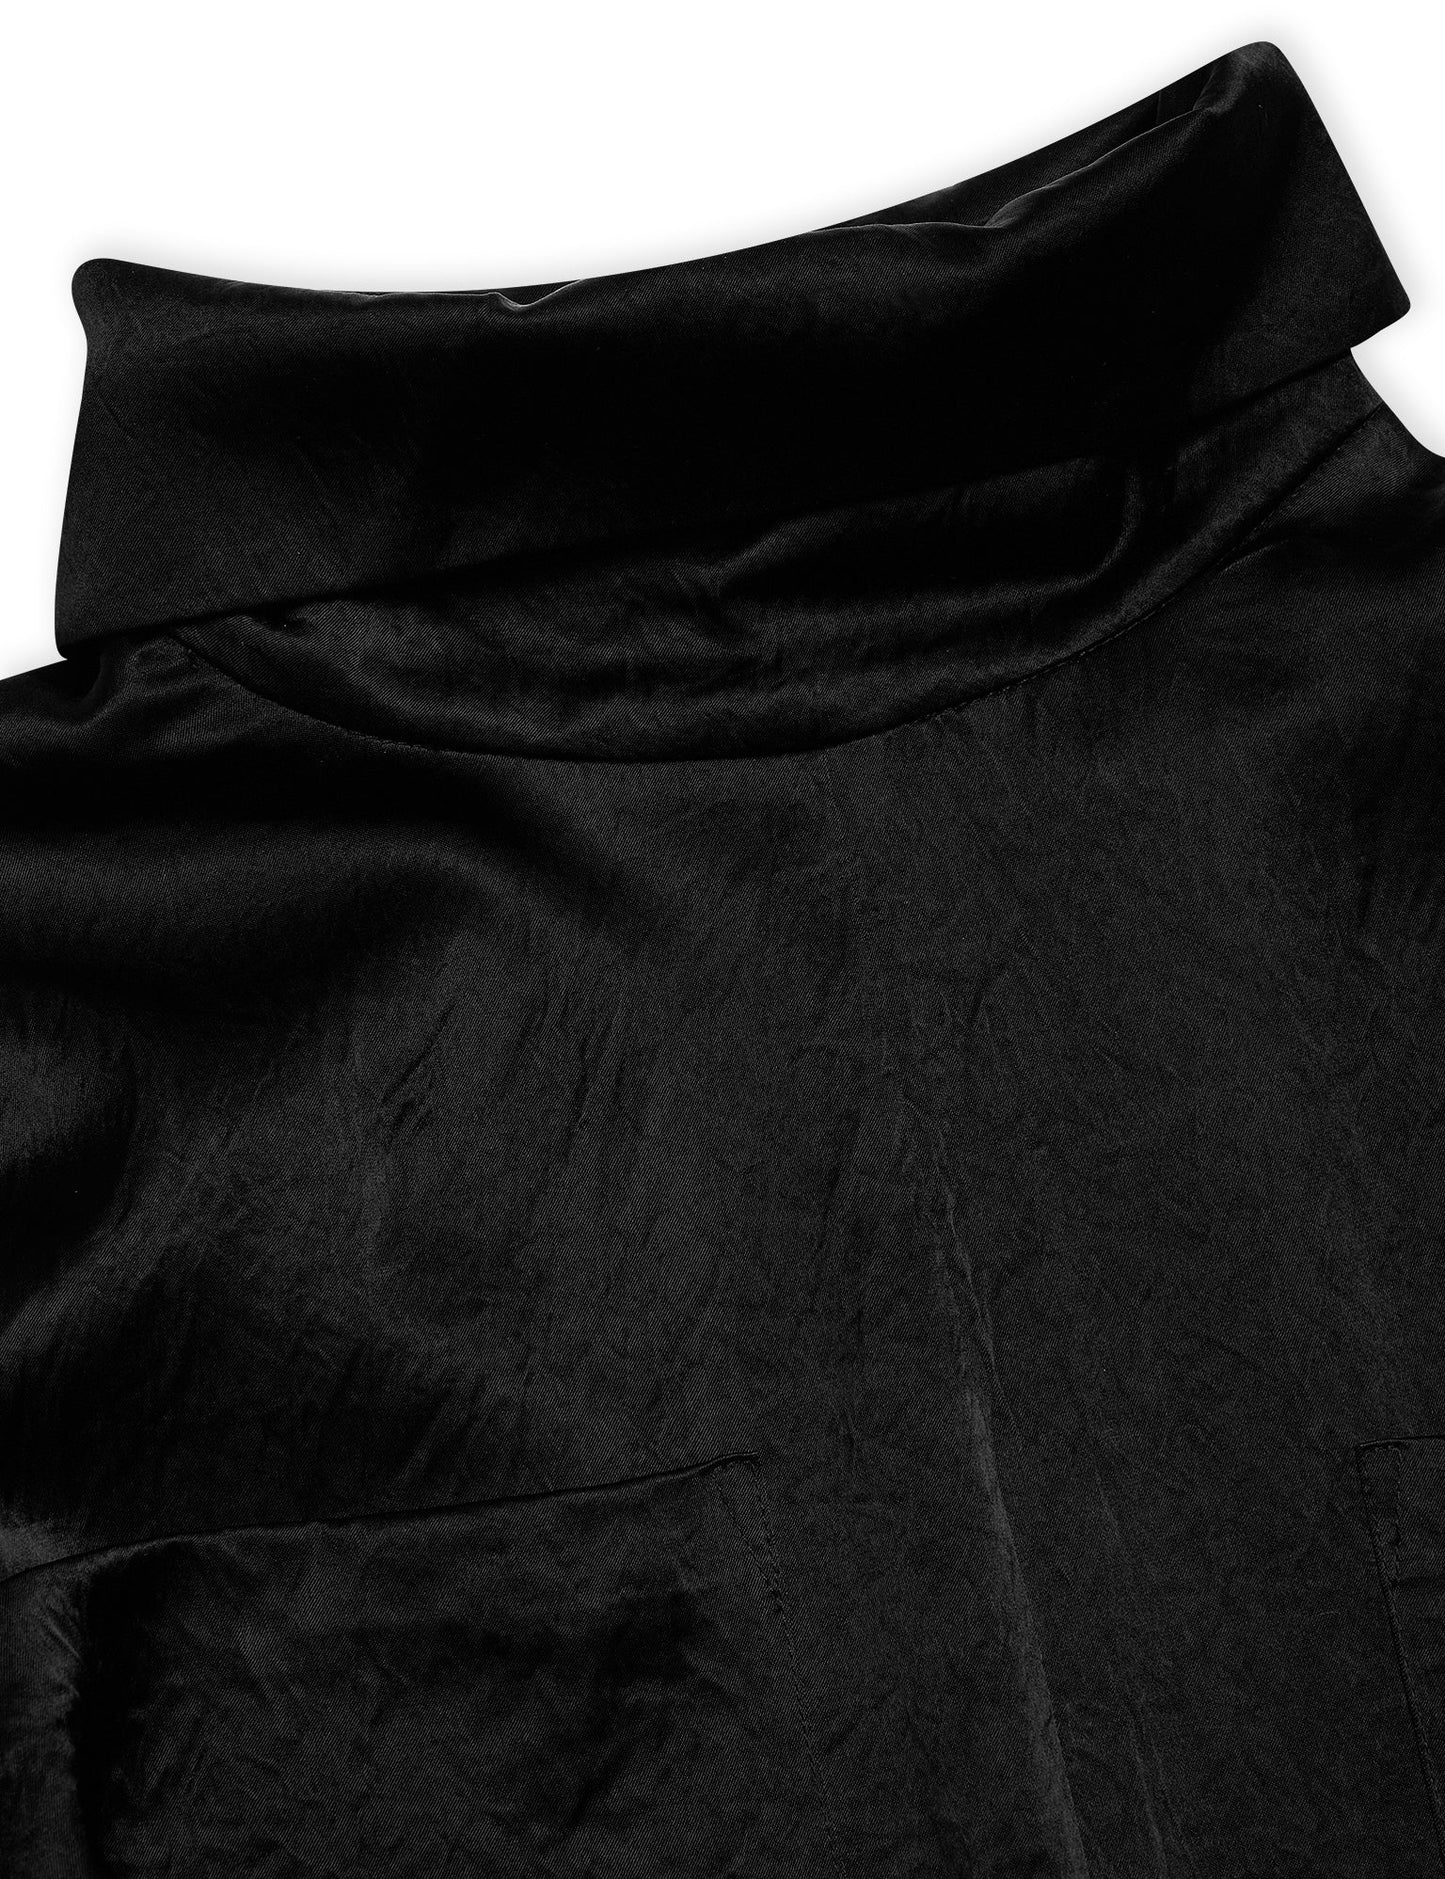 Surface Baden Dress, Black